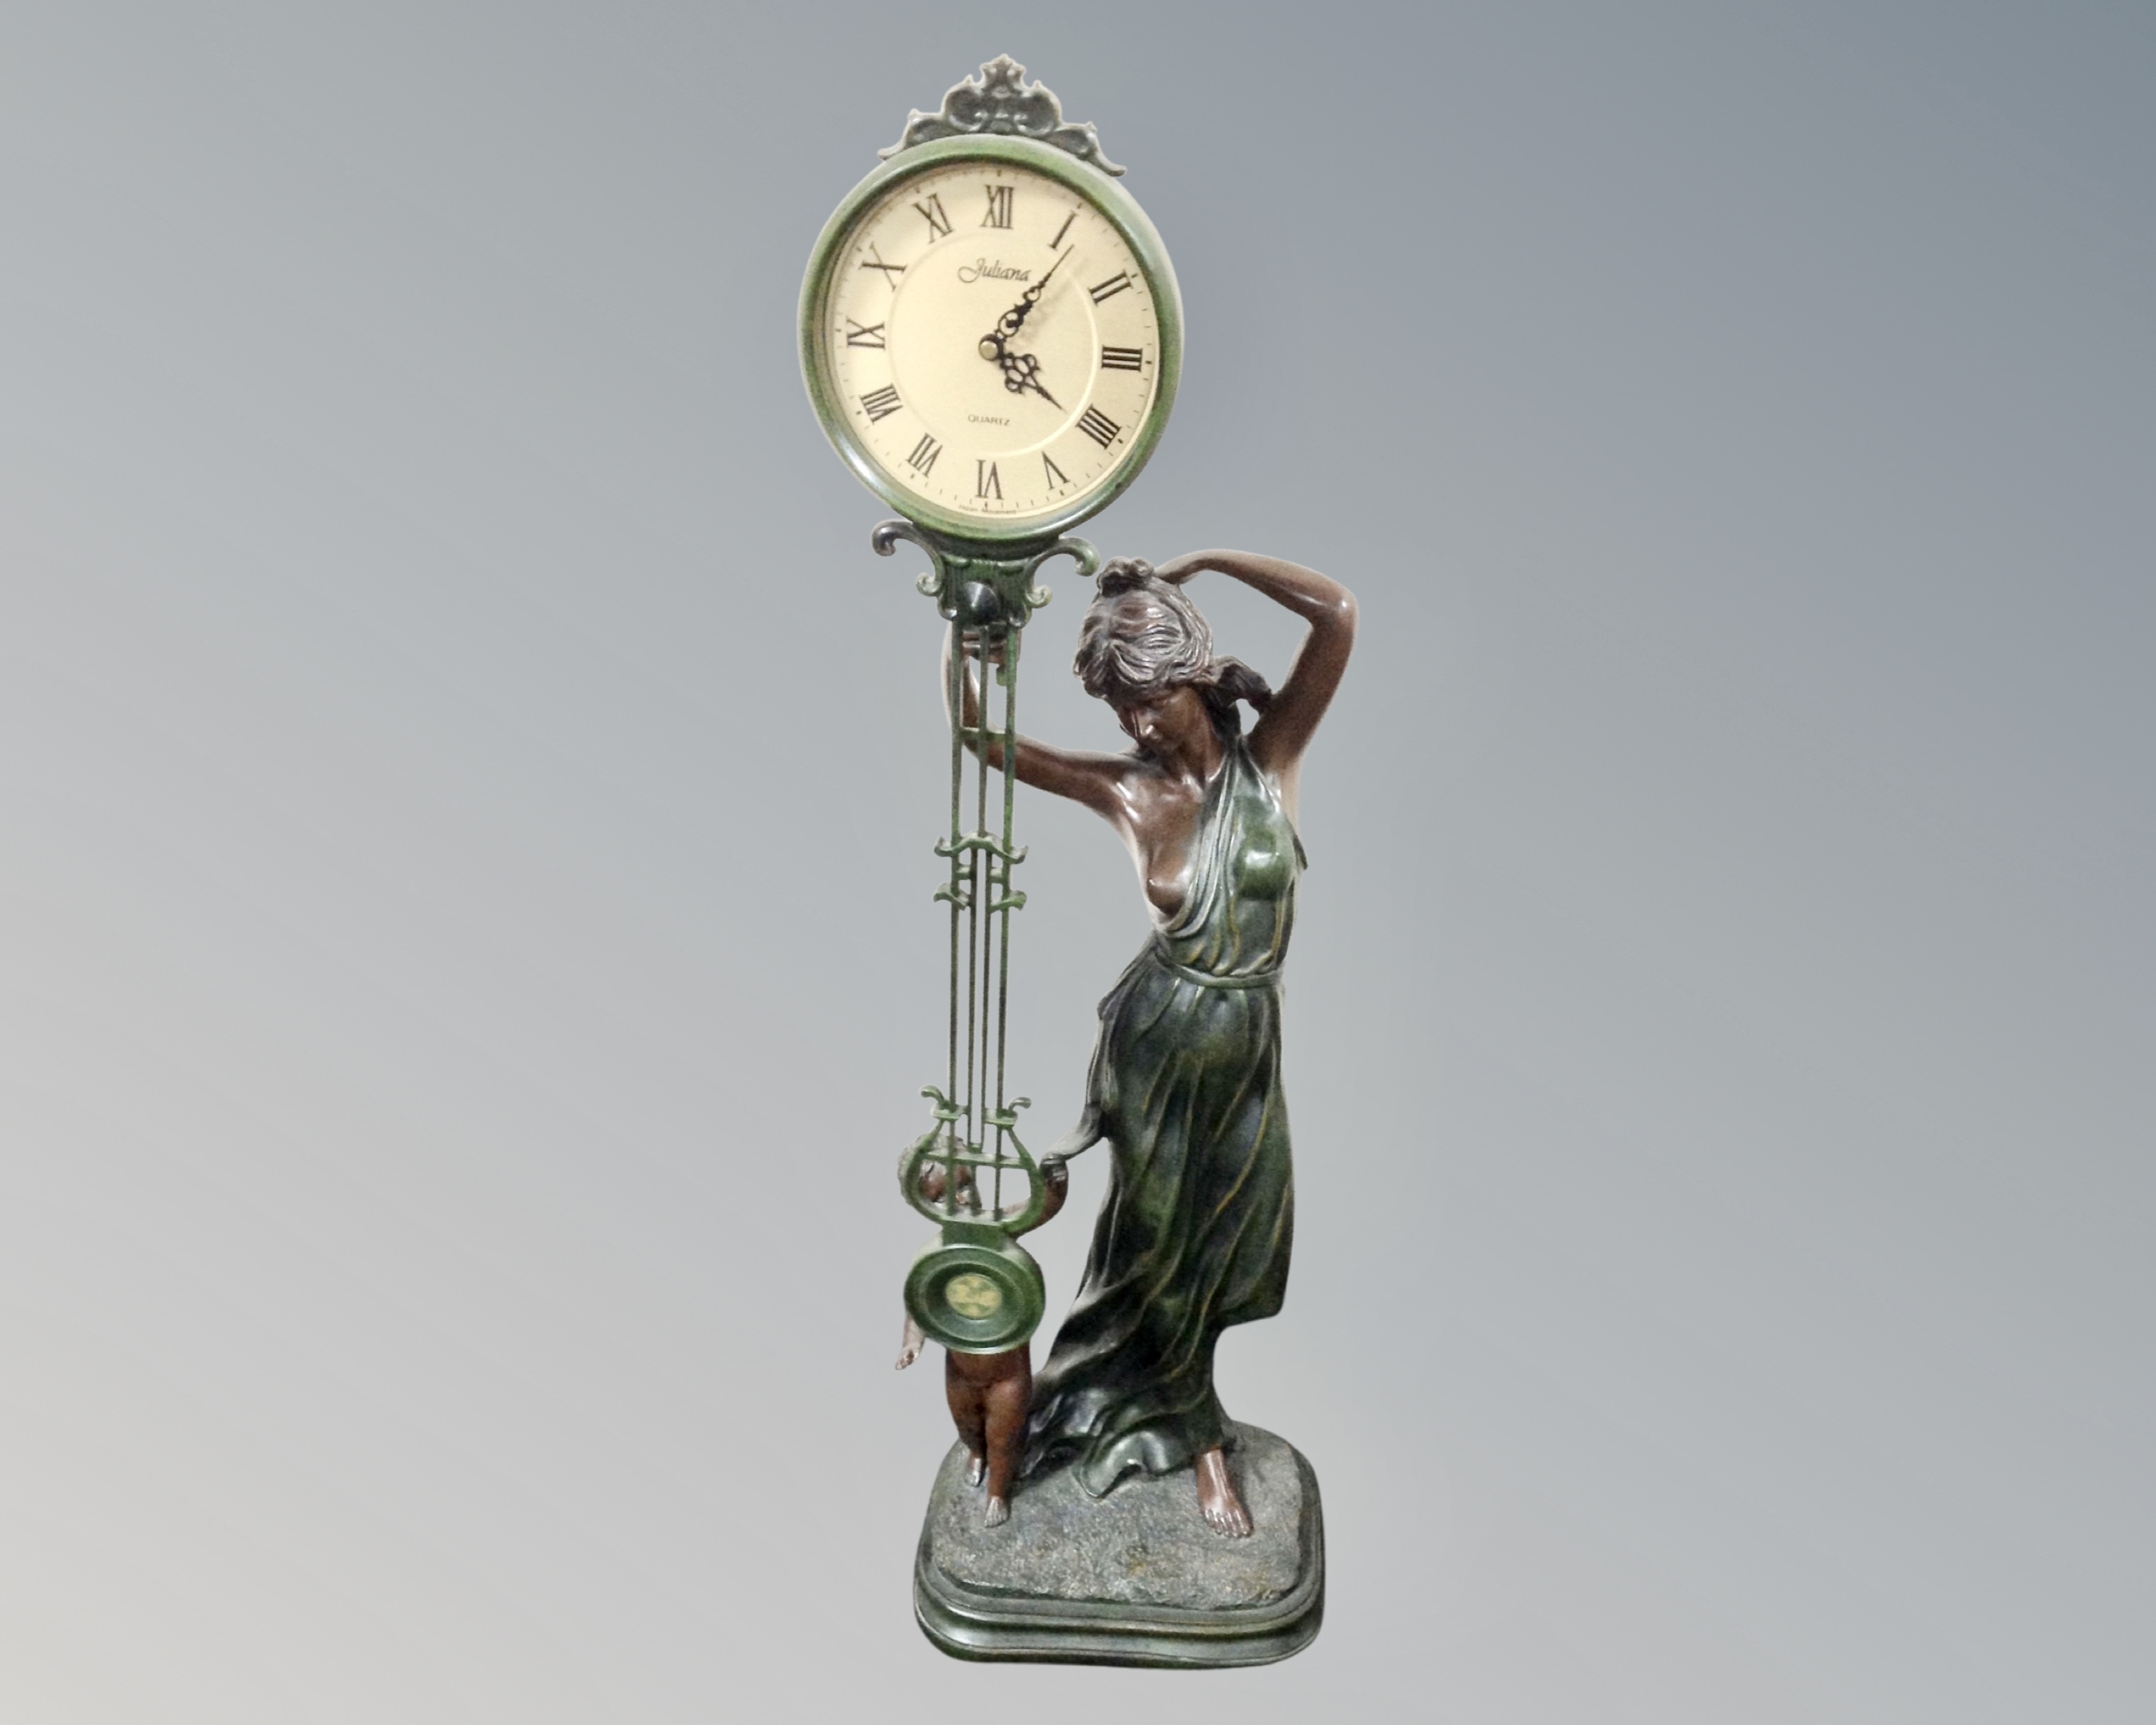 A contemporary figural clock in a bronze effect.